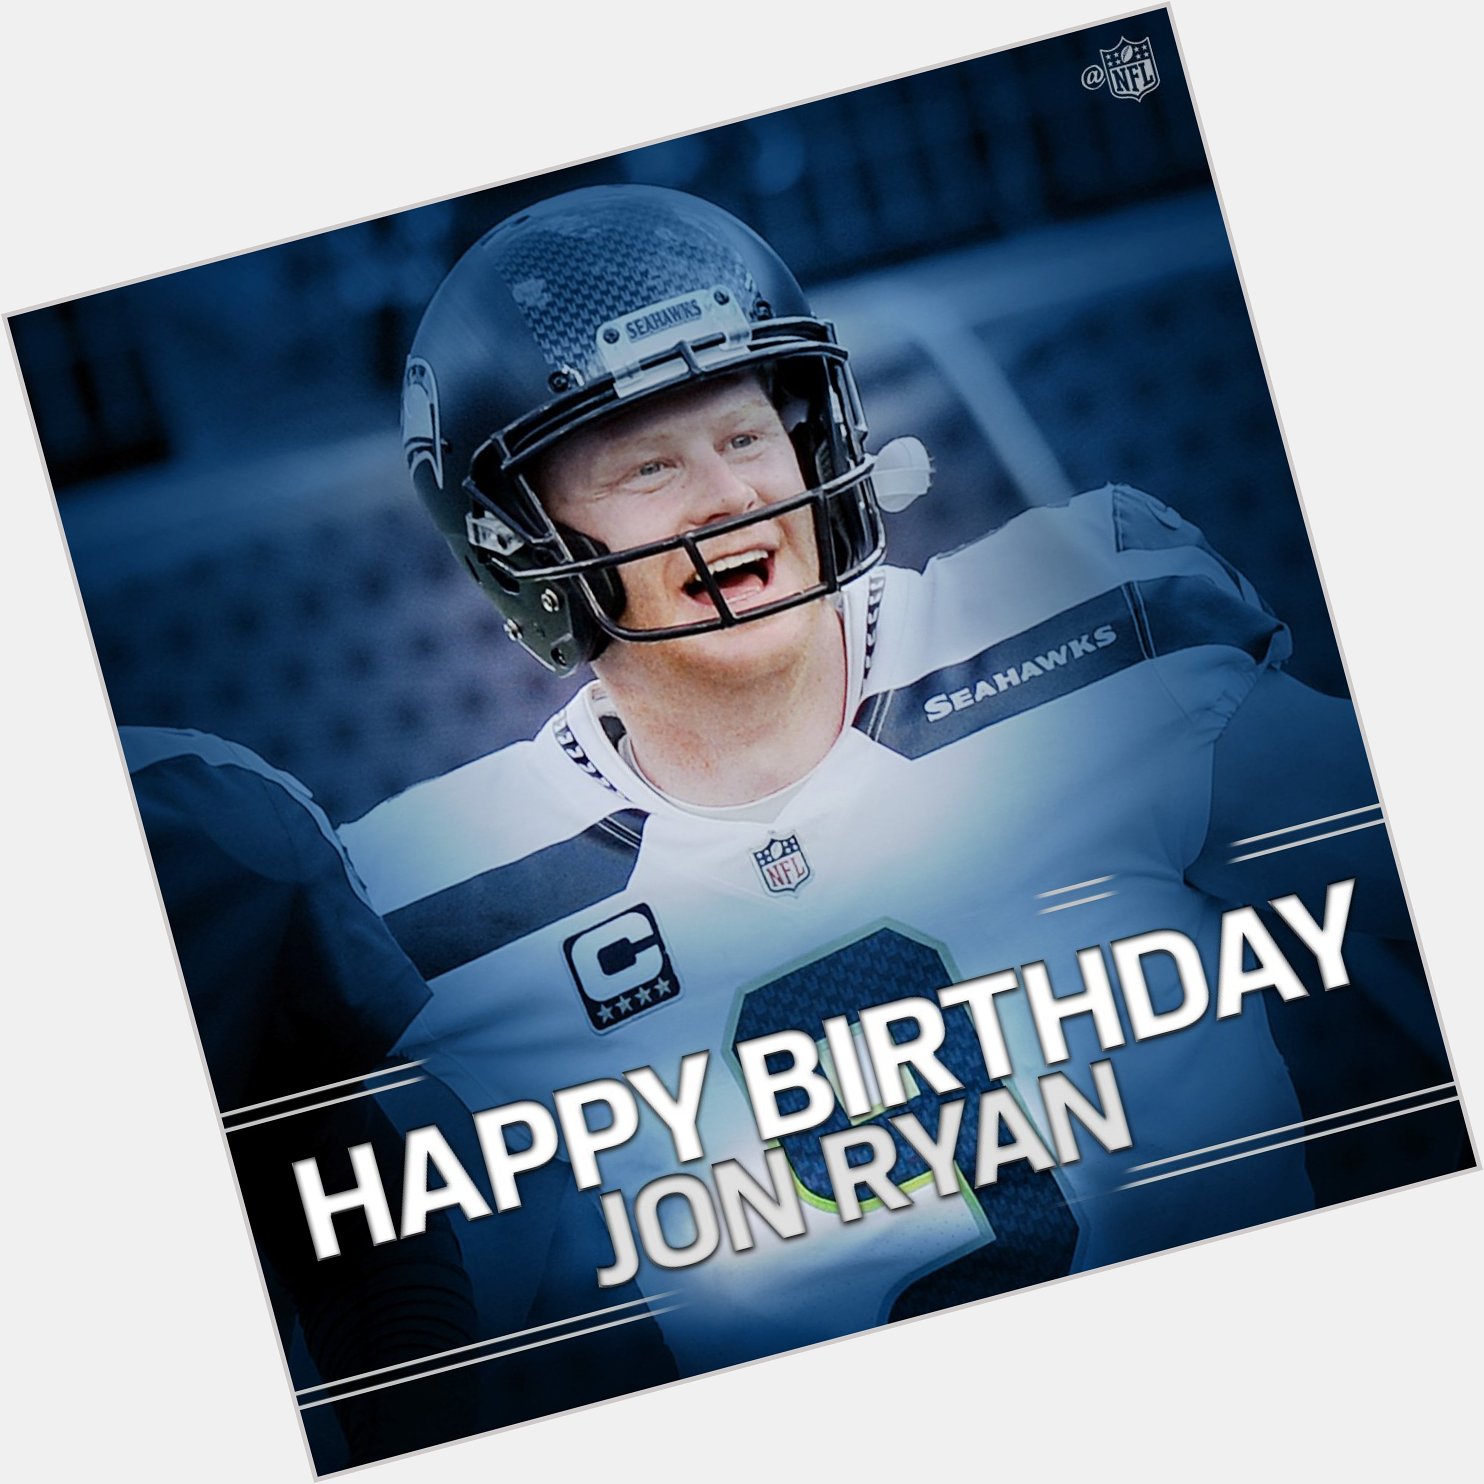 To wish Jon Ryan a happy birthday AND send the punter to Orlando!   